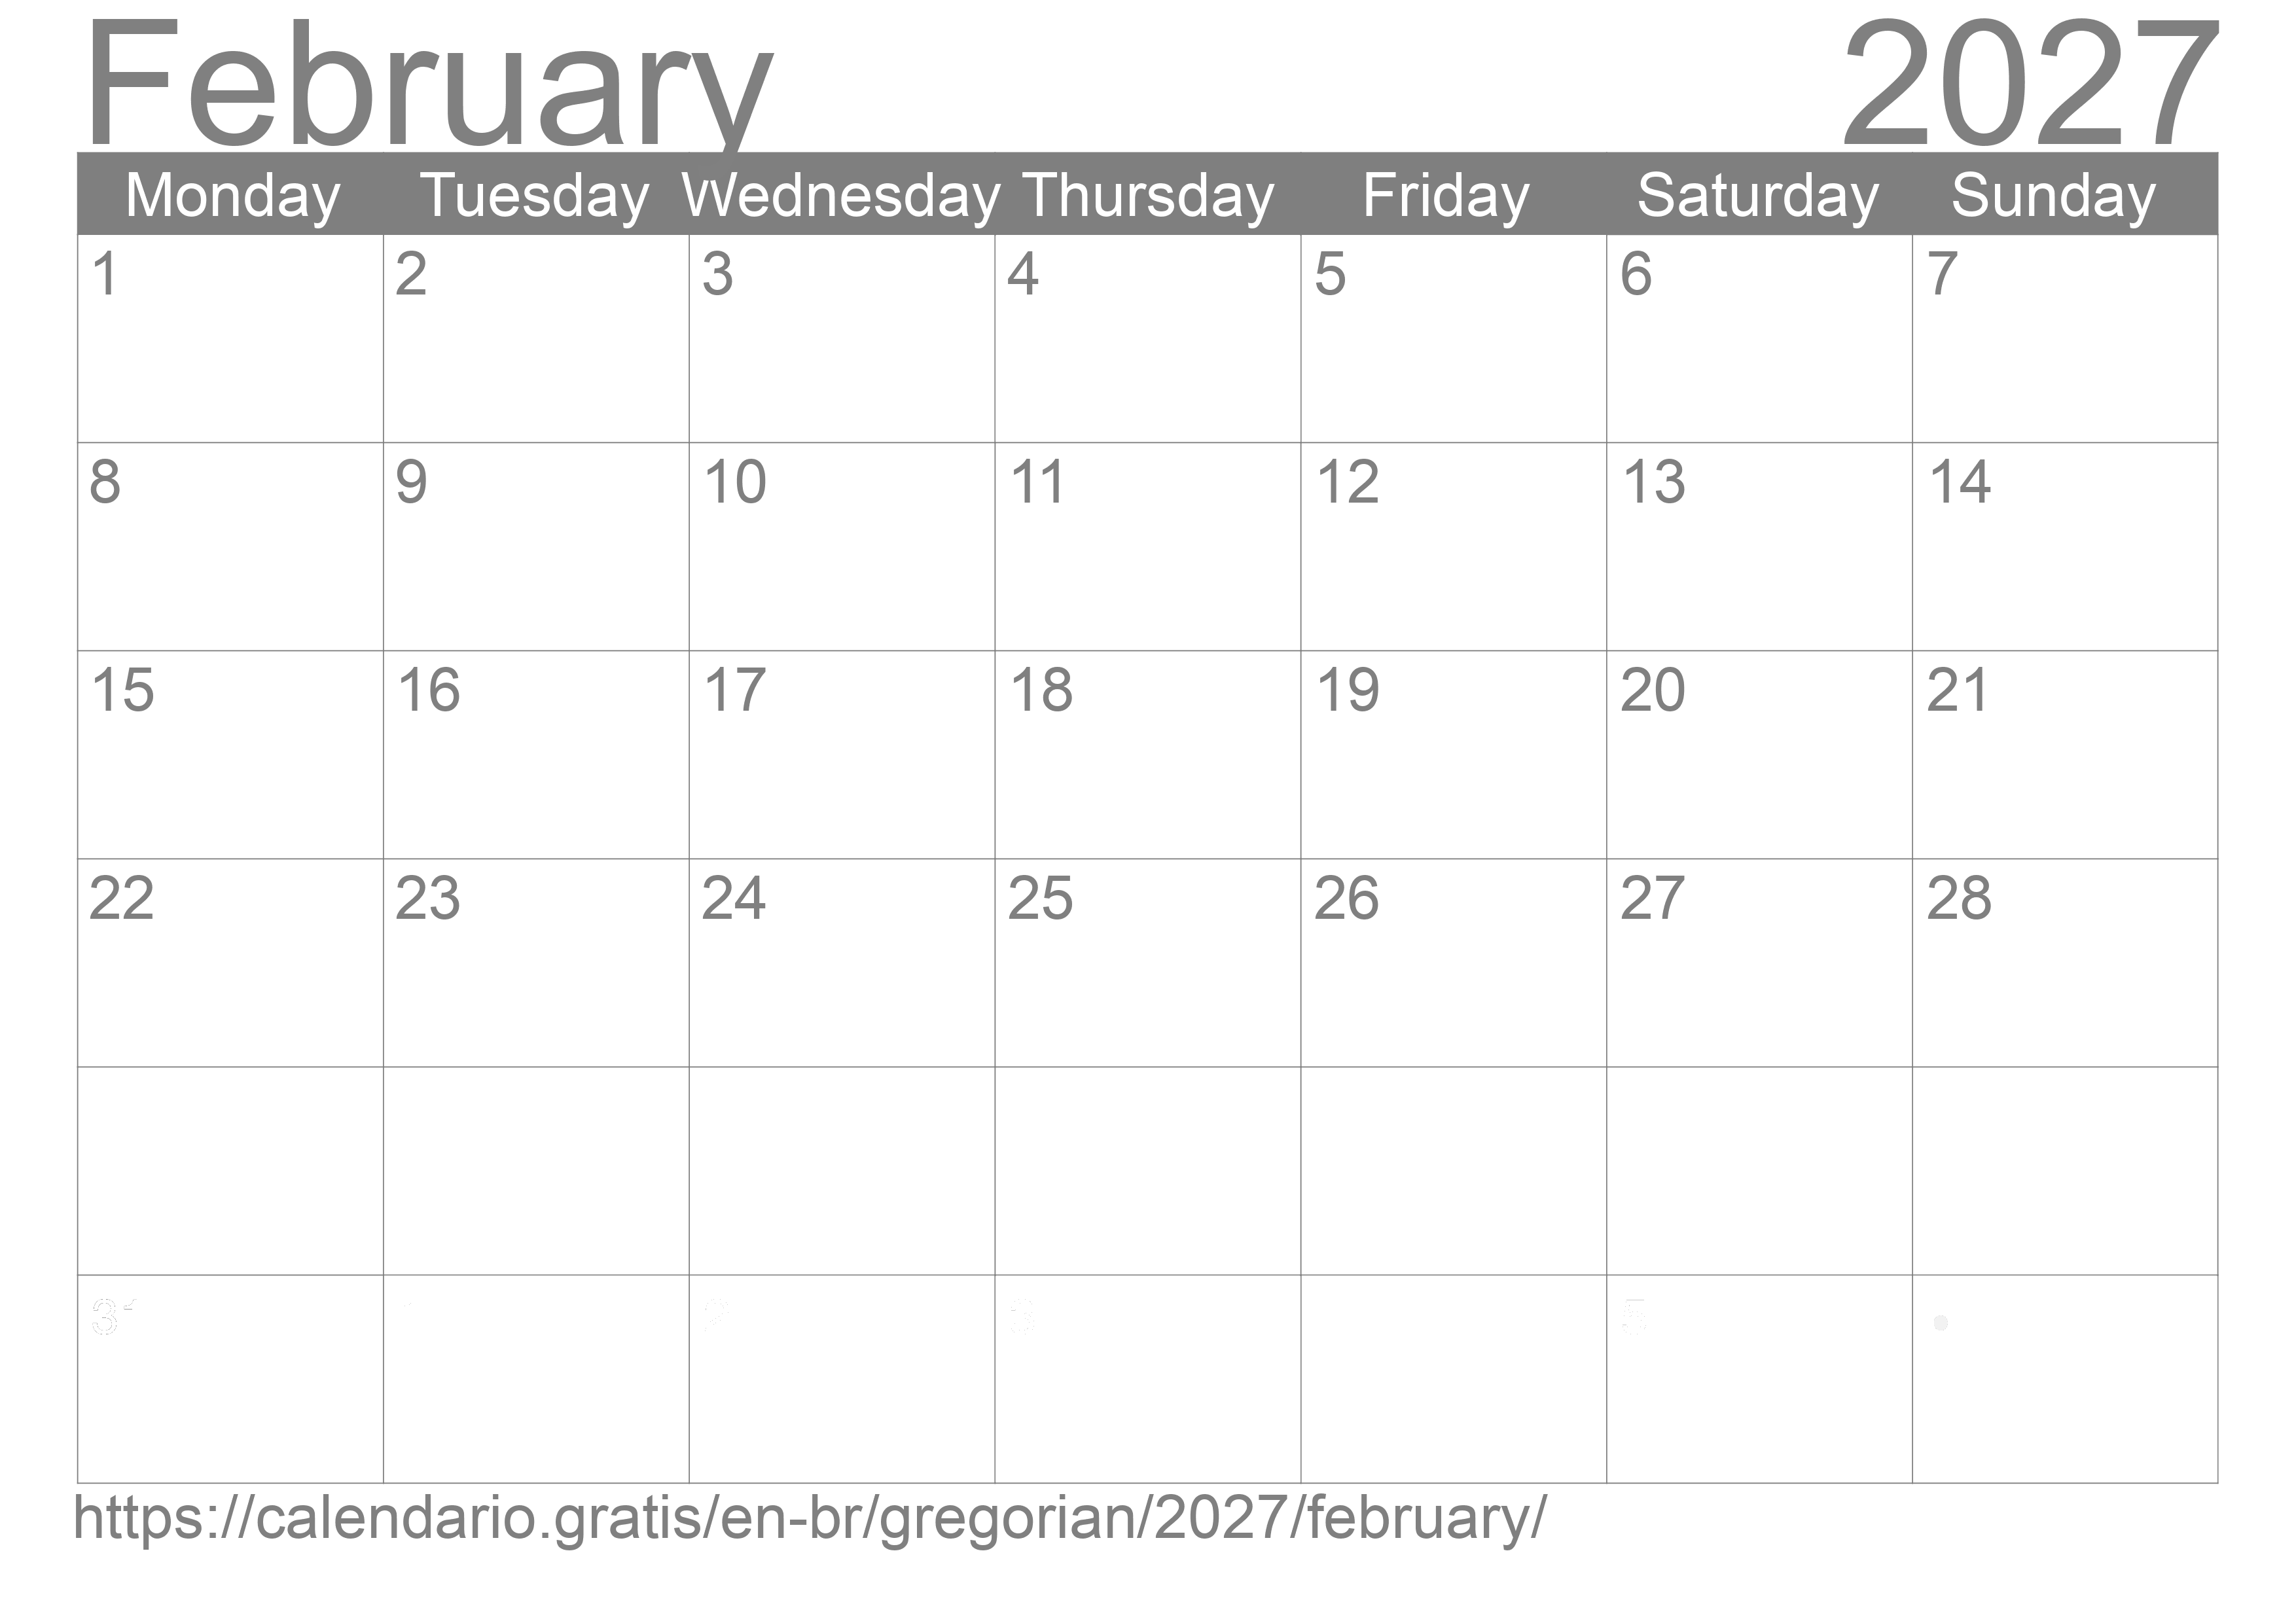 Calendar February 2027 to print